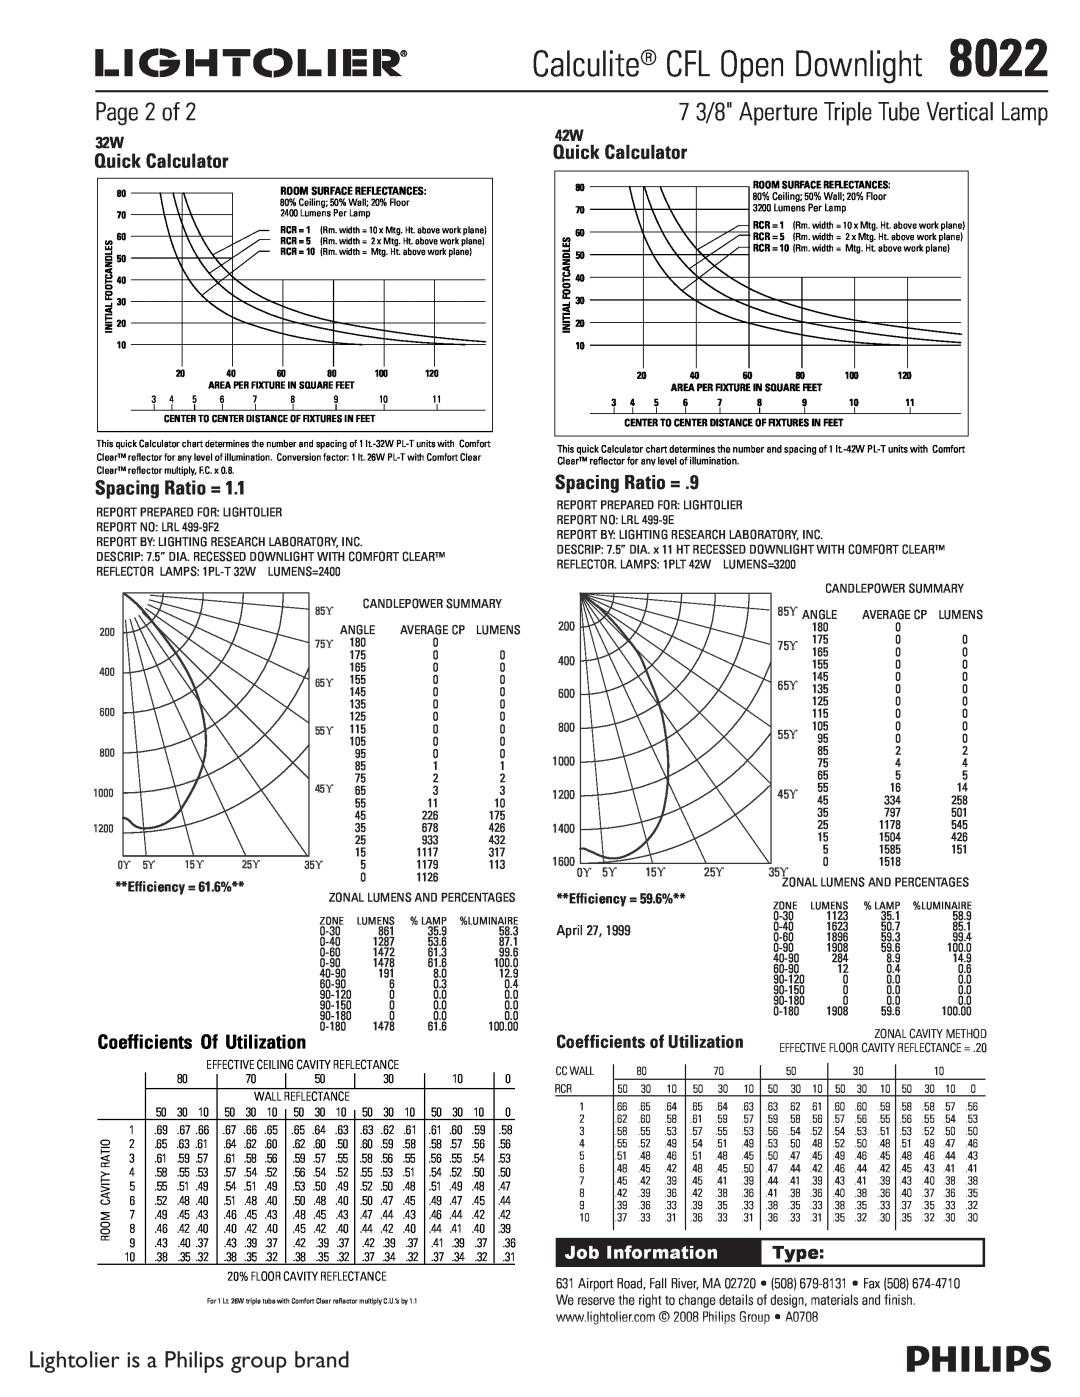 Lightolier 8022 Page 2 of, 7 3/8 Aperture Triple Tube Vertical Lamp, Quick Calculator, Spacing Ratio =, Job Information 